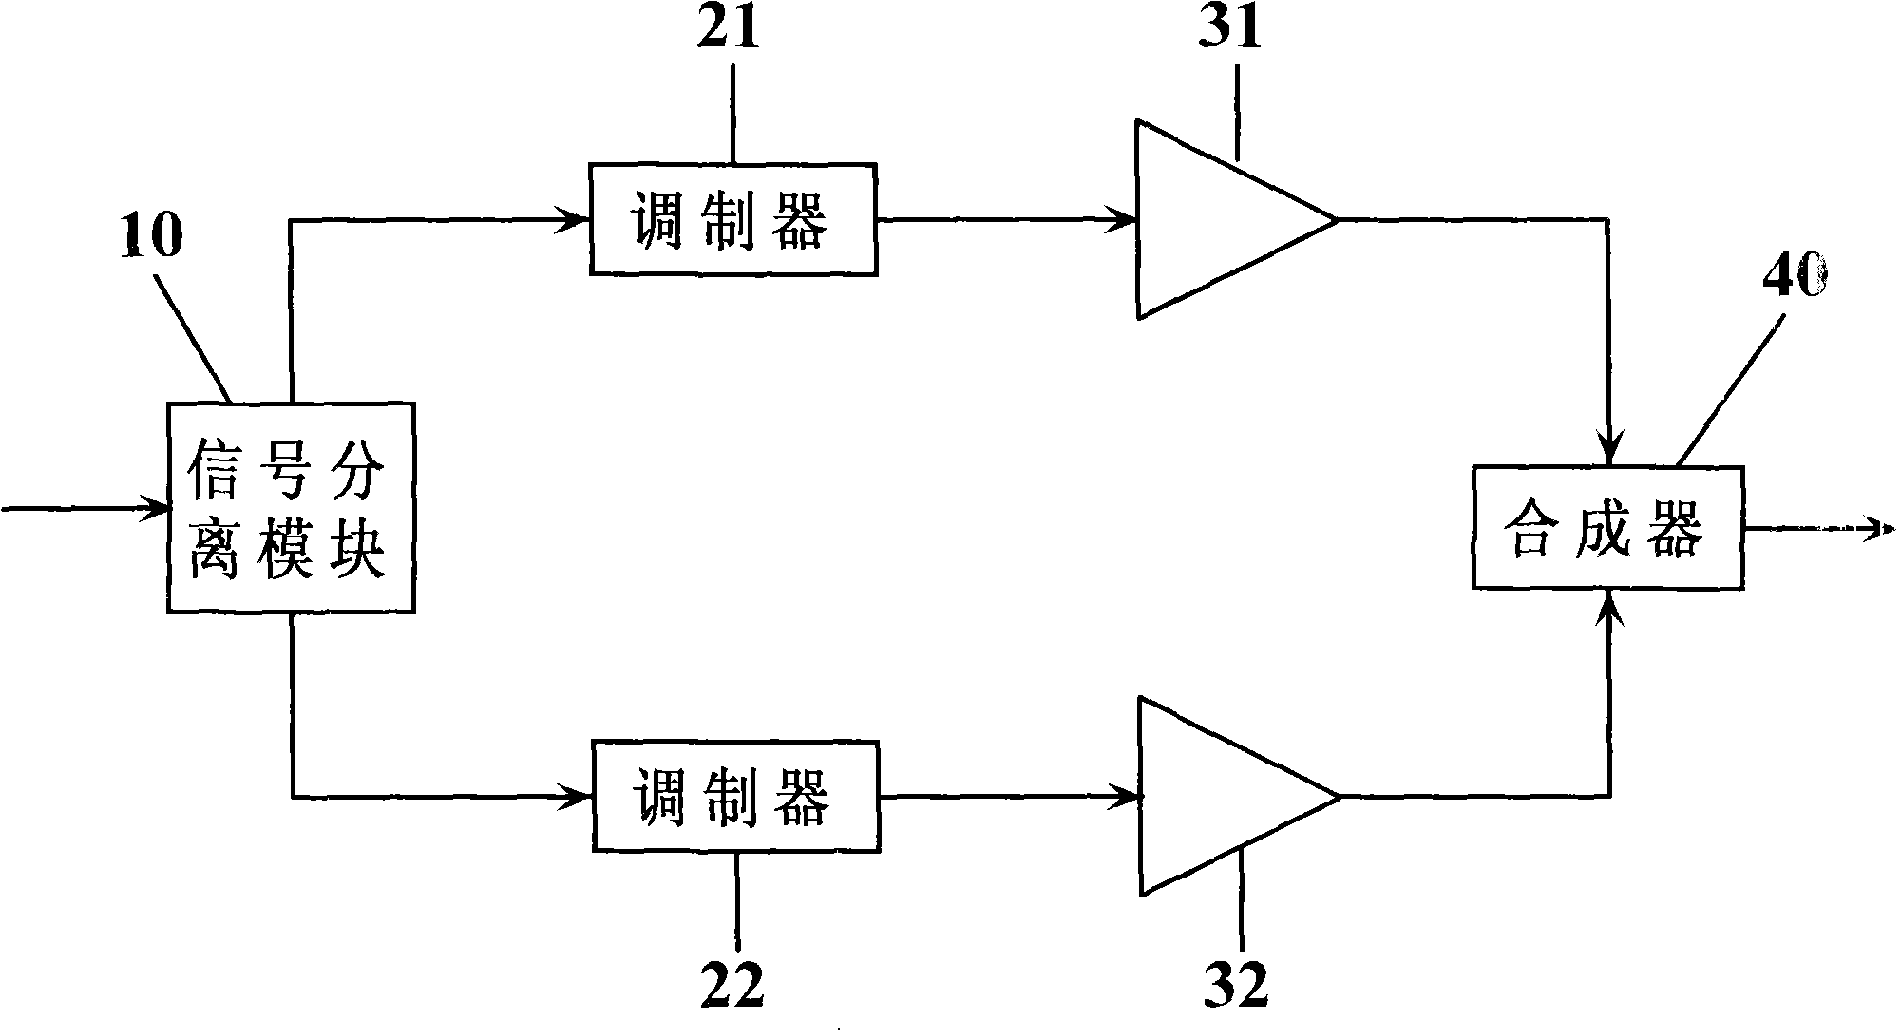 Linear transmitter using non-linear element